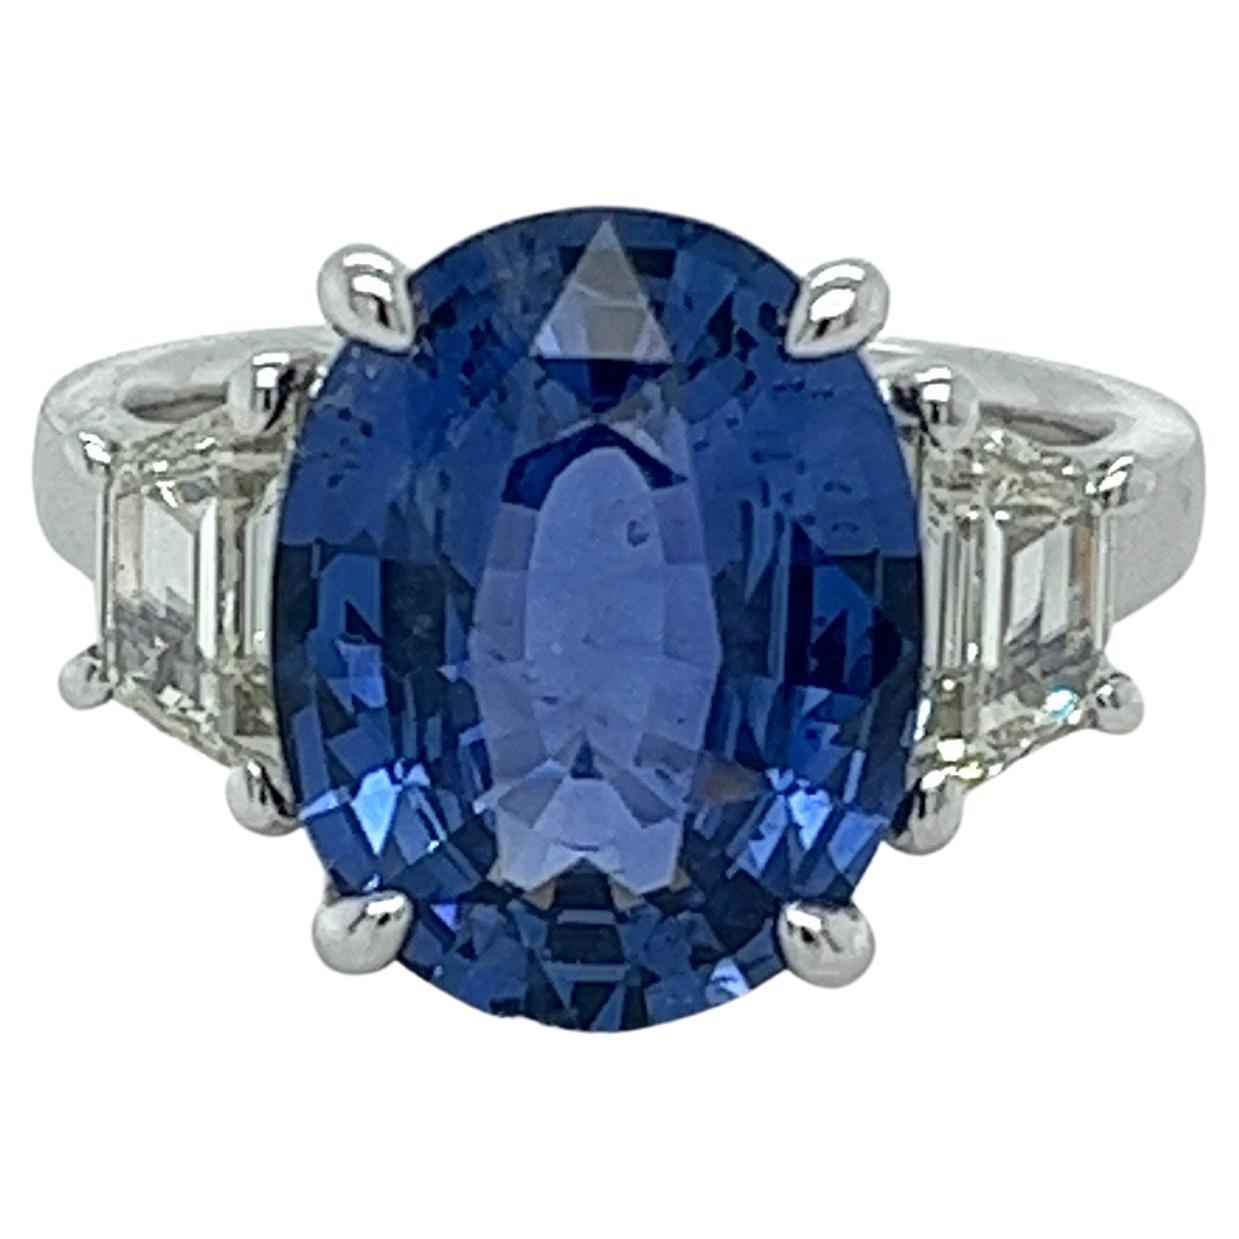 Certified 7.26 Carat Ceylon Sapphire & Diamond Ring in Platinum